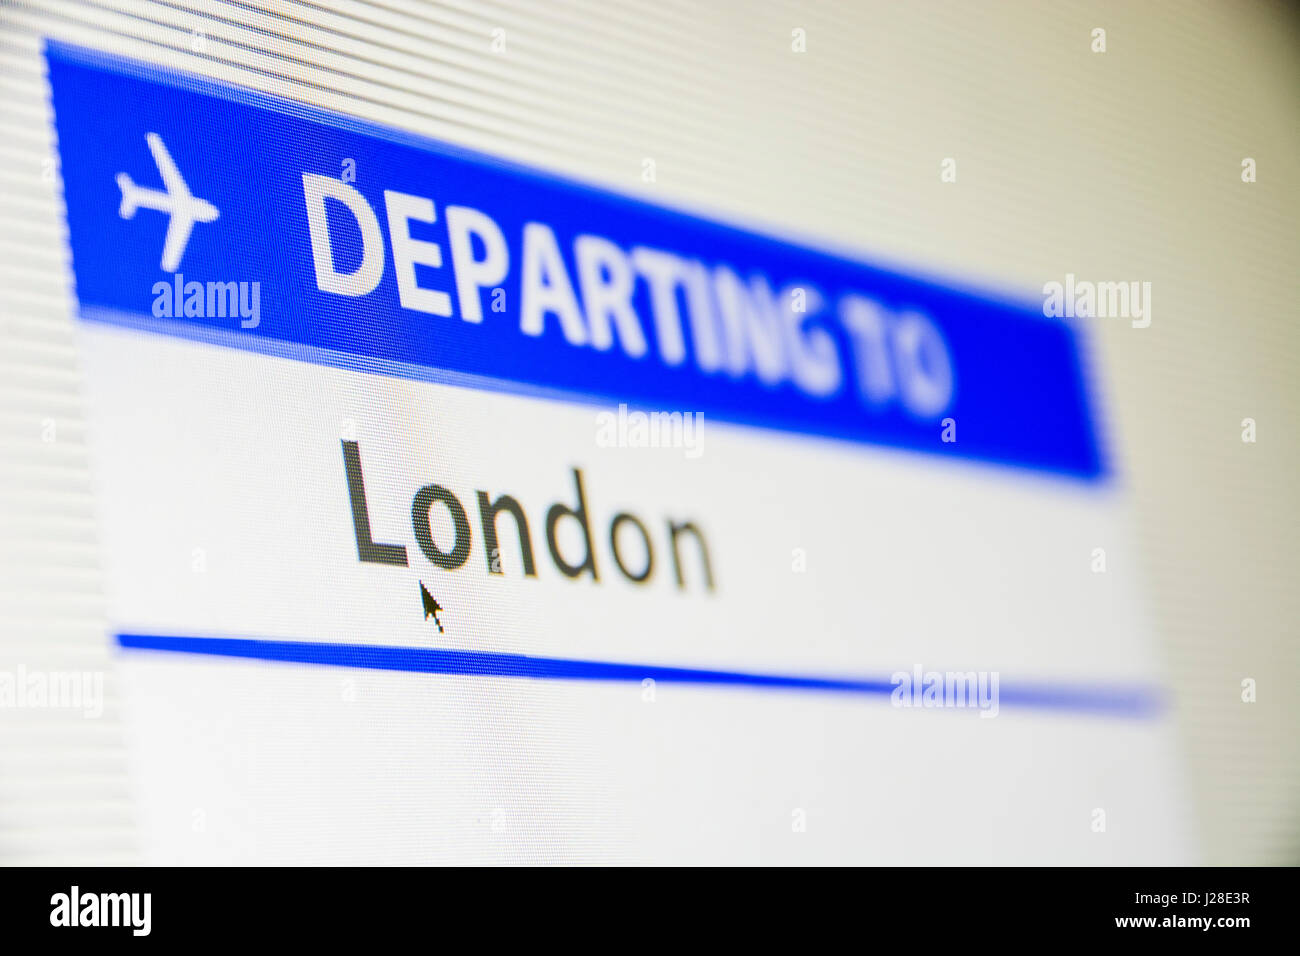 Image result for flight departing for london